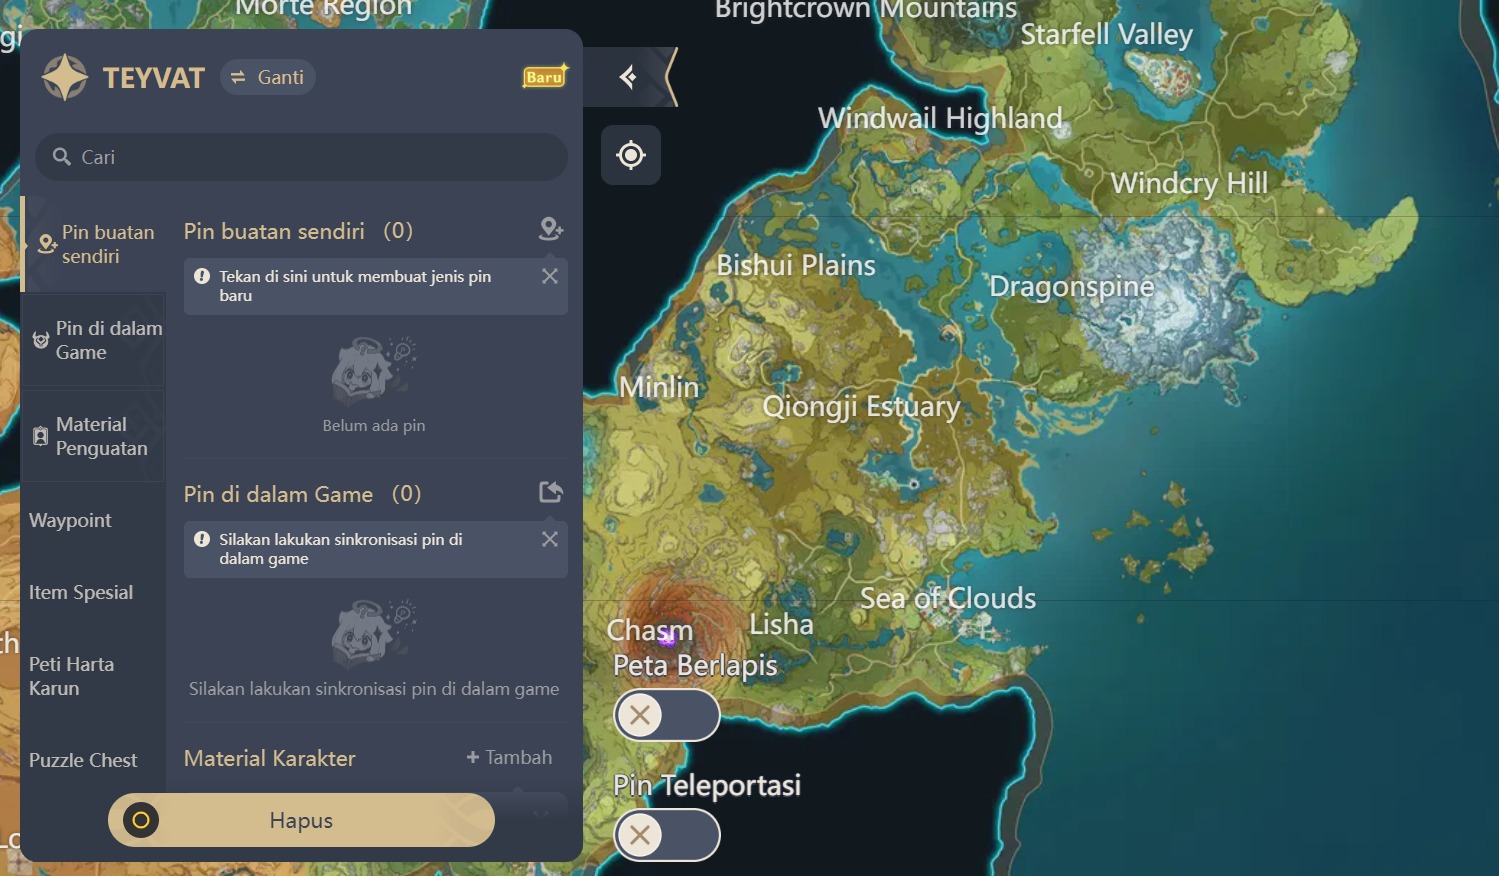 Hoyolab interactive map